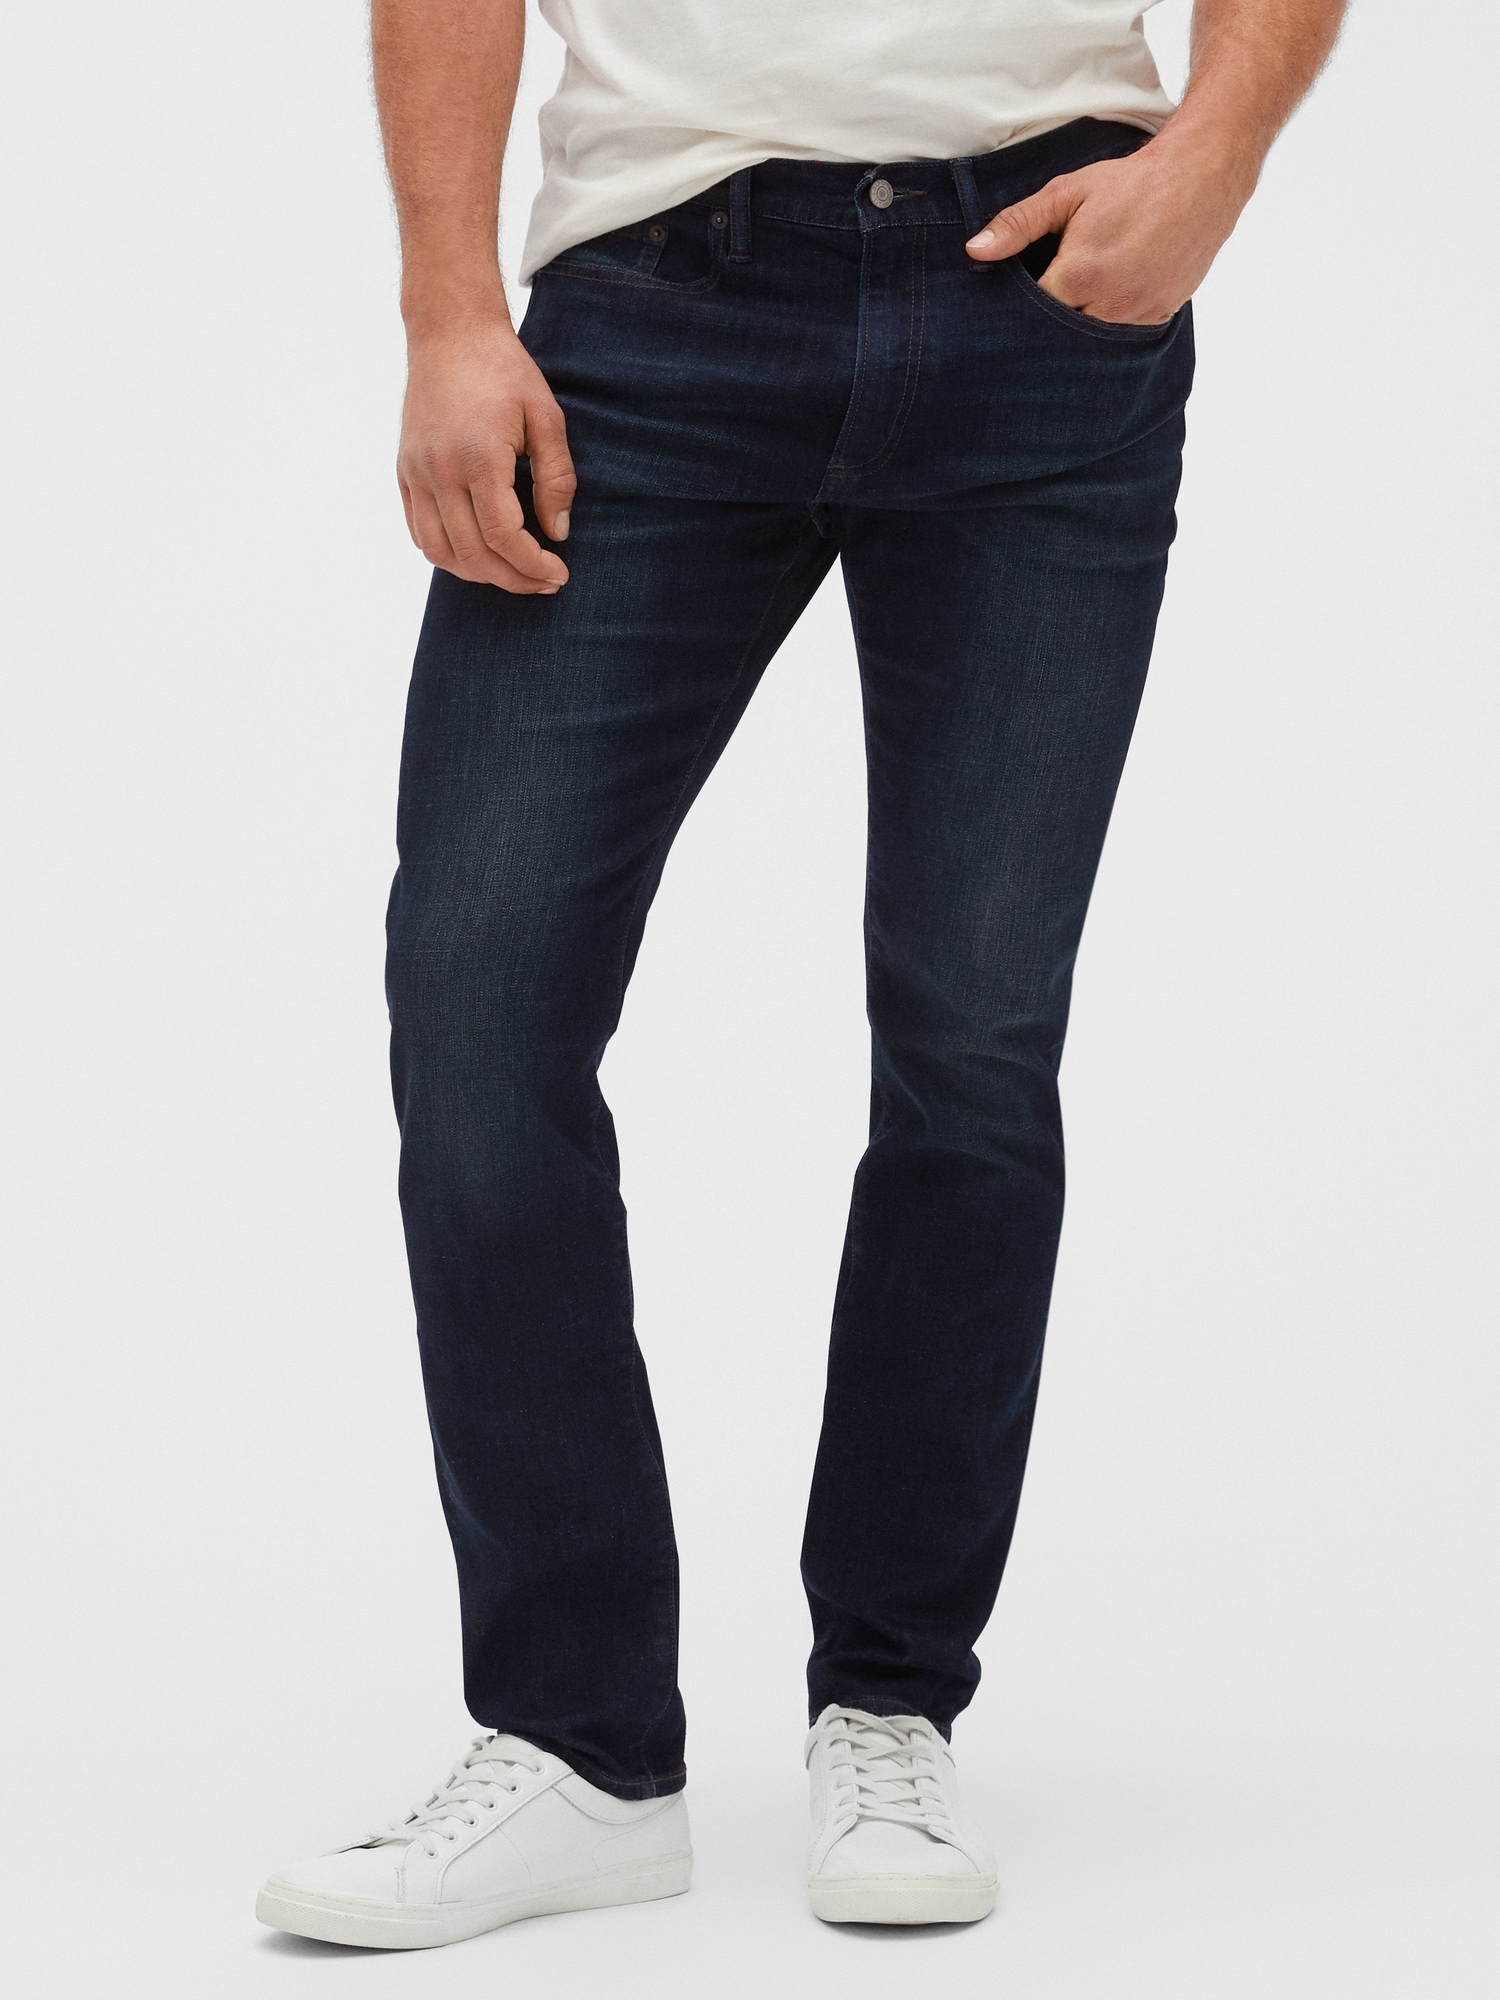 Soft Wear Slim Fit GapFlex Jeans with Washwell™ | Gap Factory